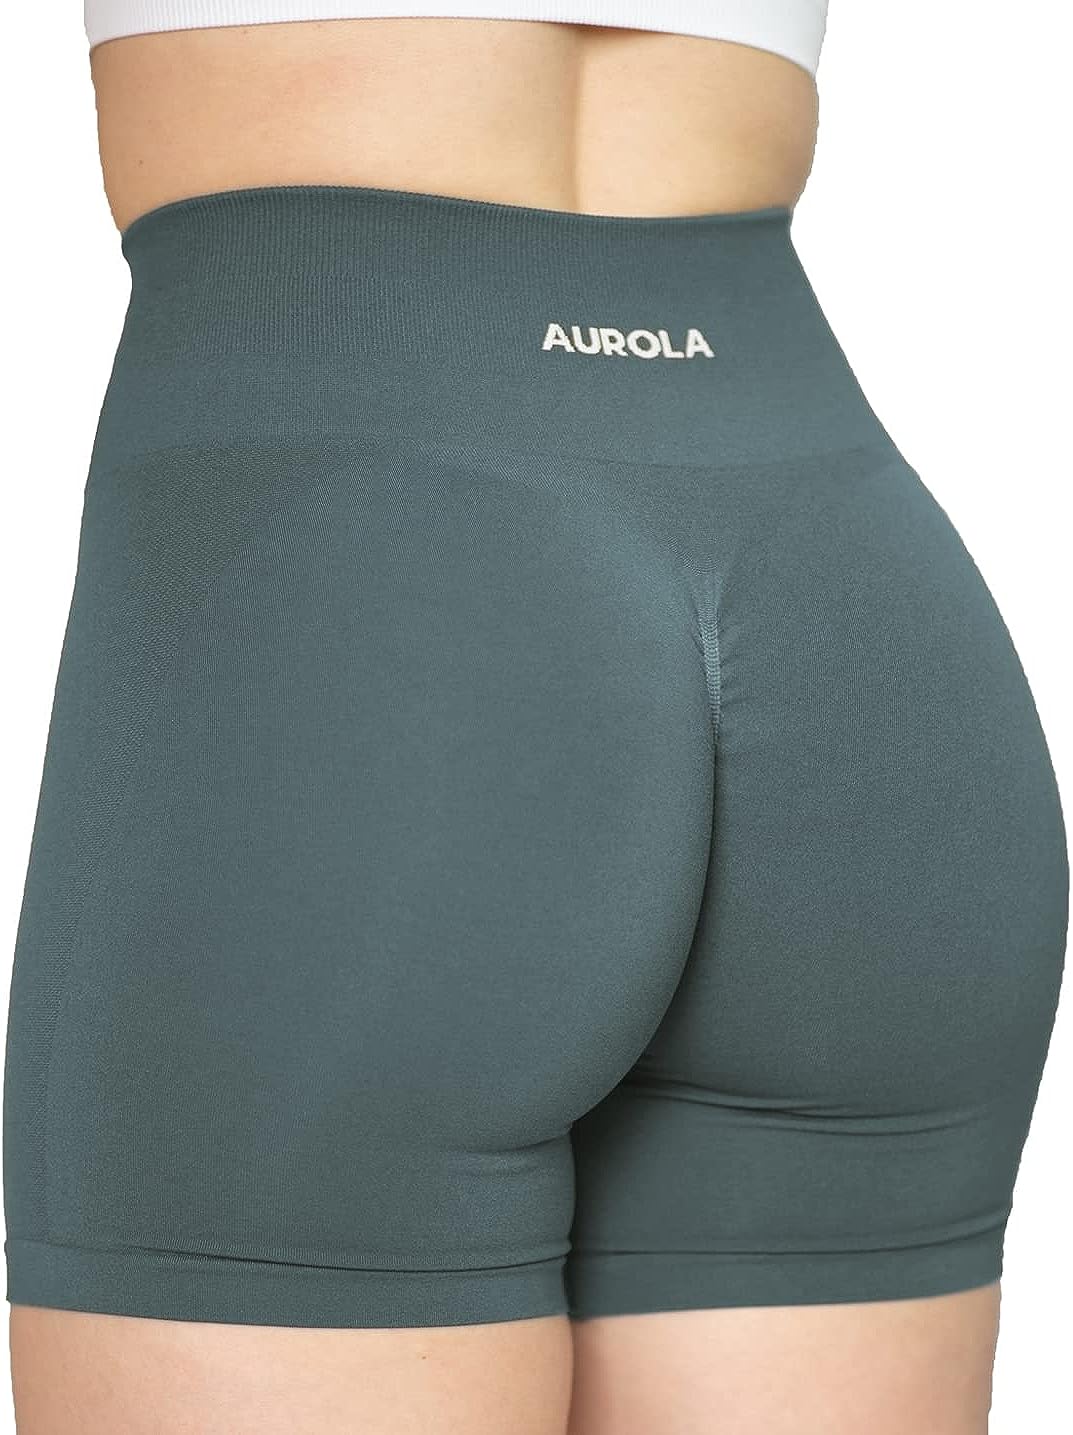 FIRST RANK AUROLA Intensify Workout Shorts for Women Seamless Scrunch Short Gym Yoga Running Sport Active Exercise Fitness Shorts